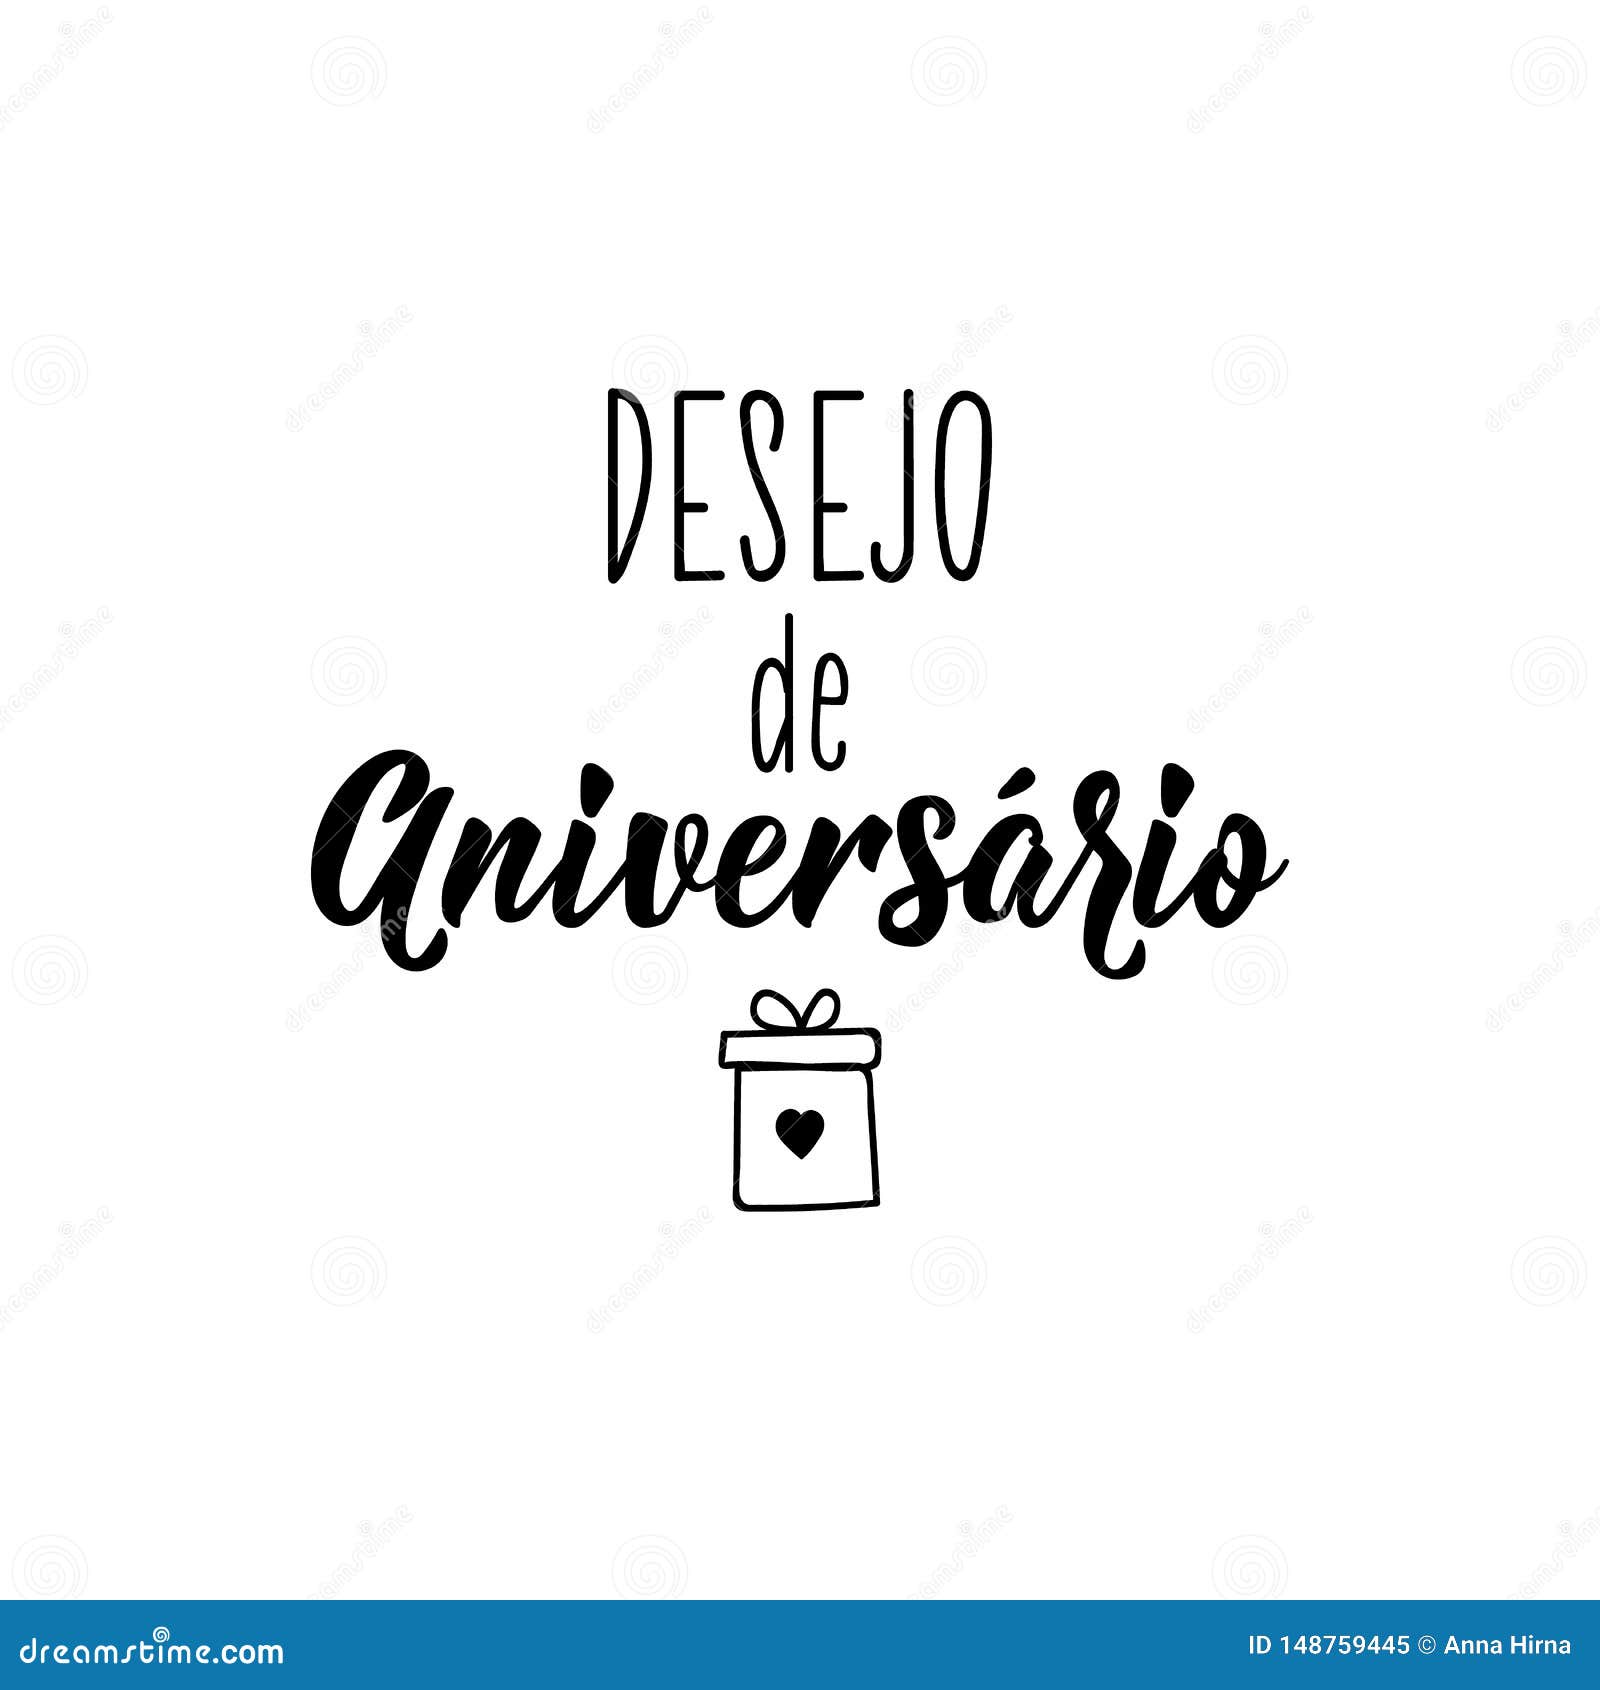 birthday wish in portuguese. ink  with hand-drawn lettering. desejo de aniversario